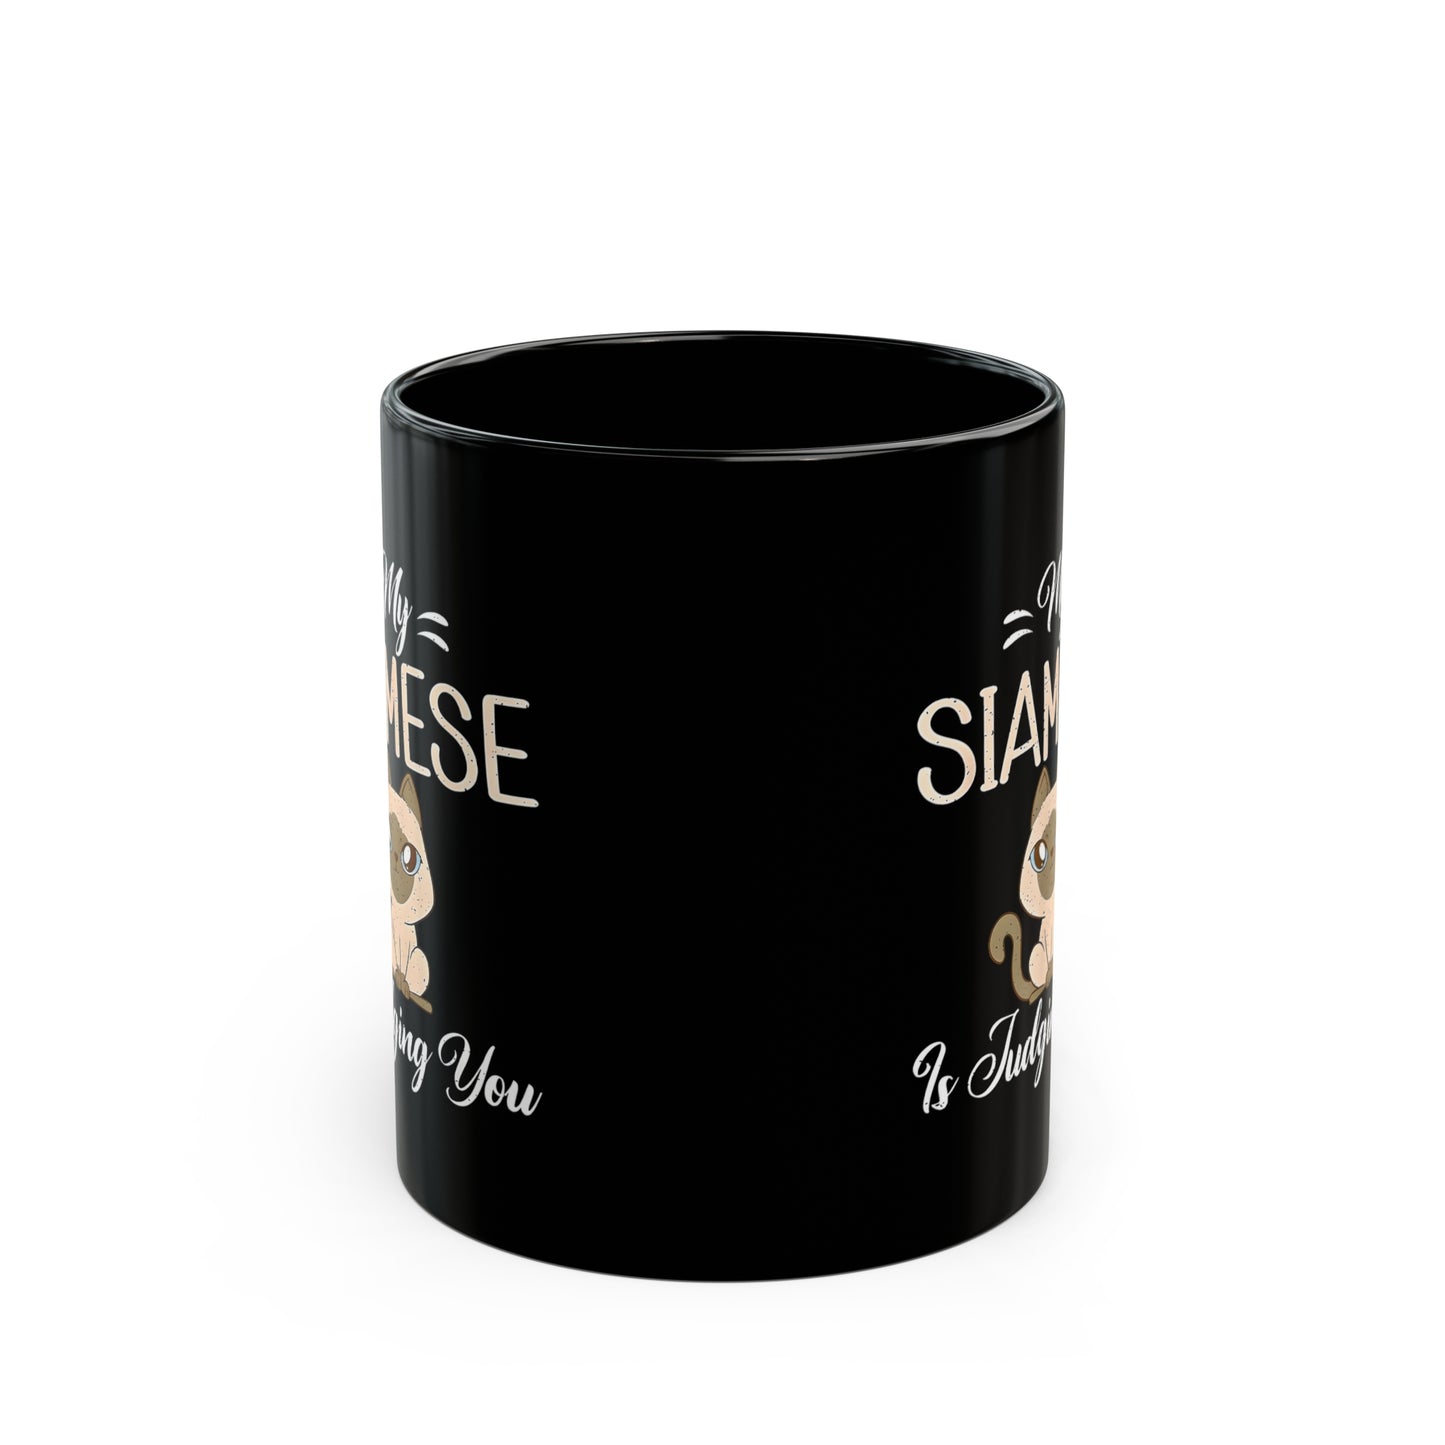 "My Siamese is Judging You" Black Mug 11oz